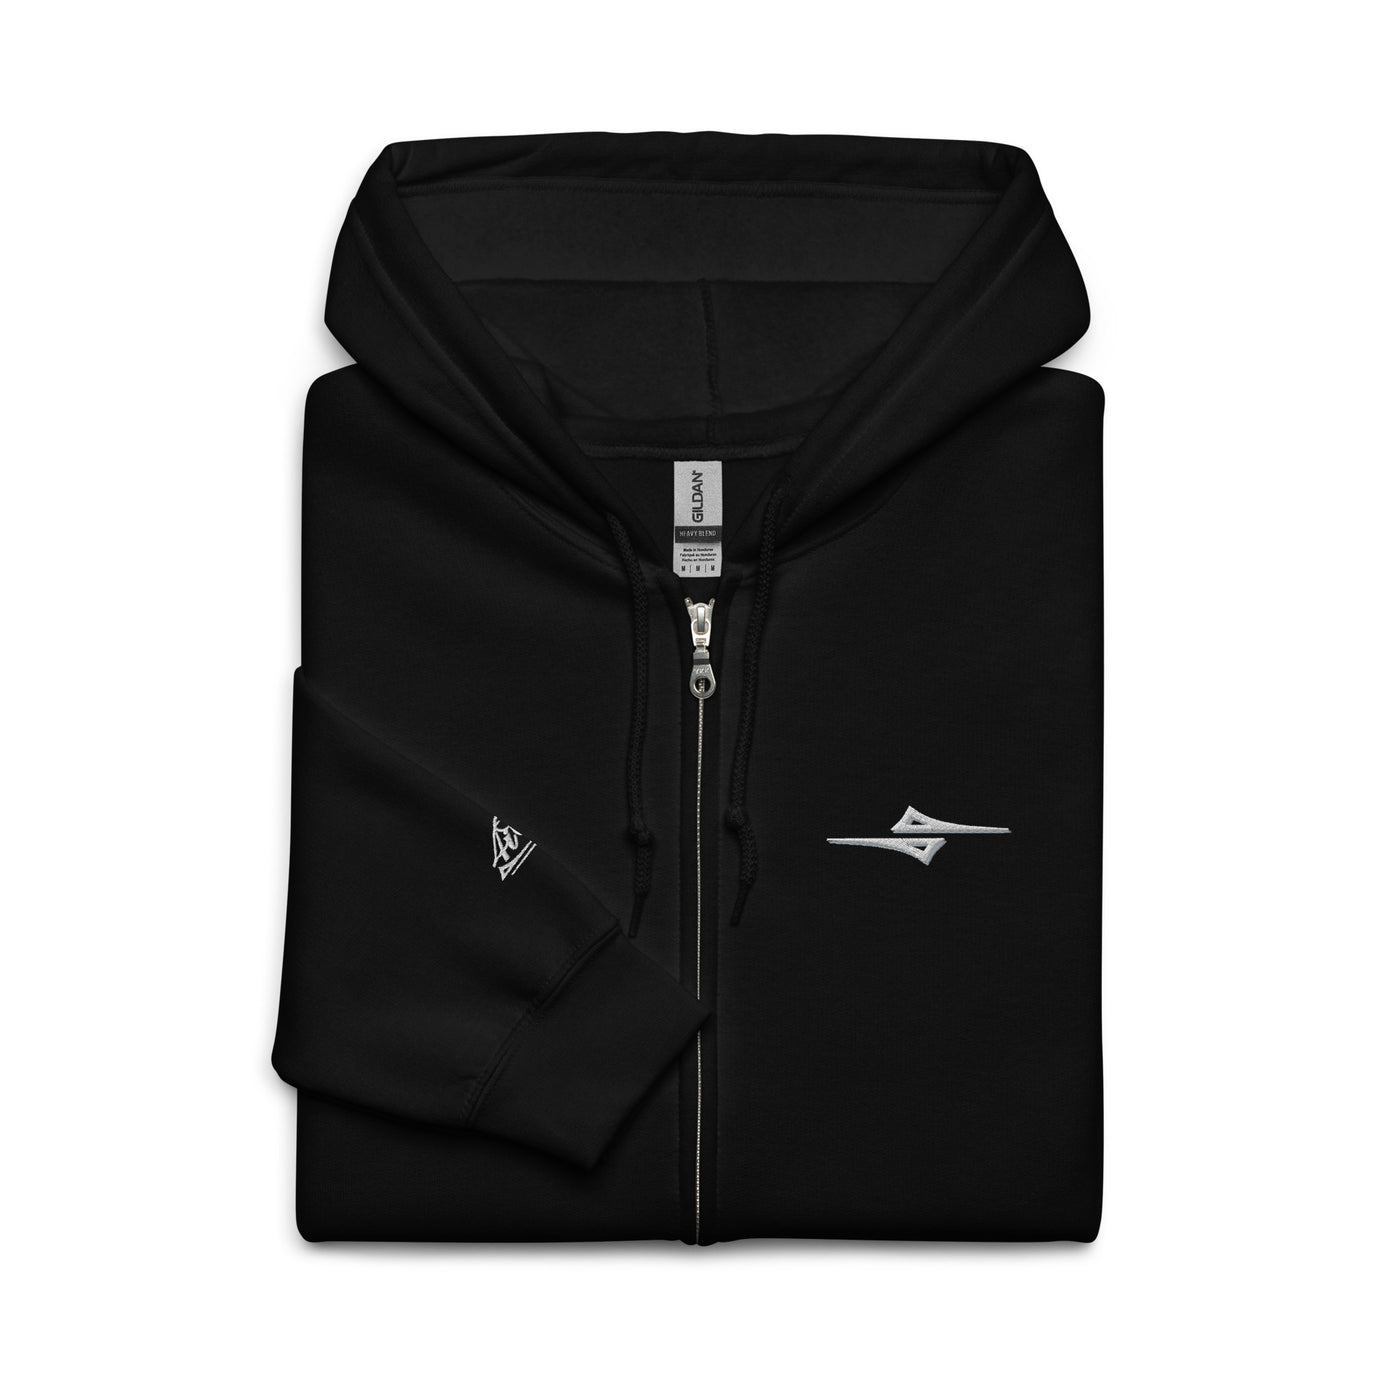  4iCe® Elite Boxing zip hoodie, black front side view